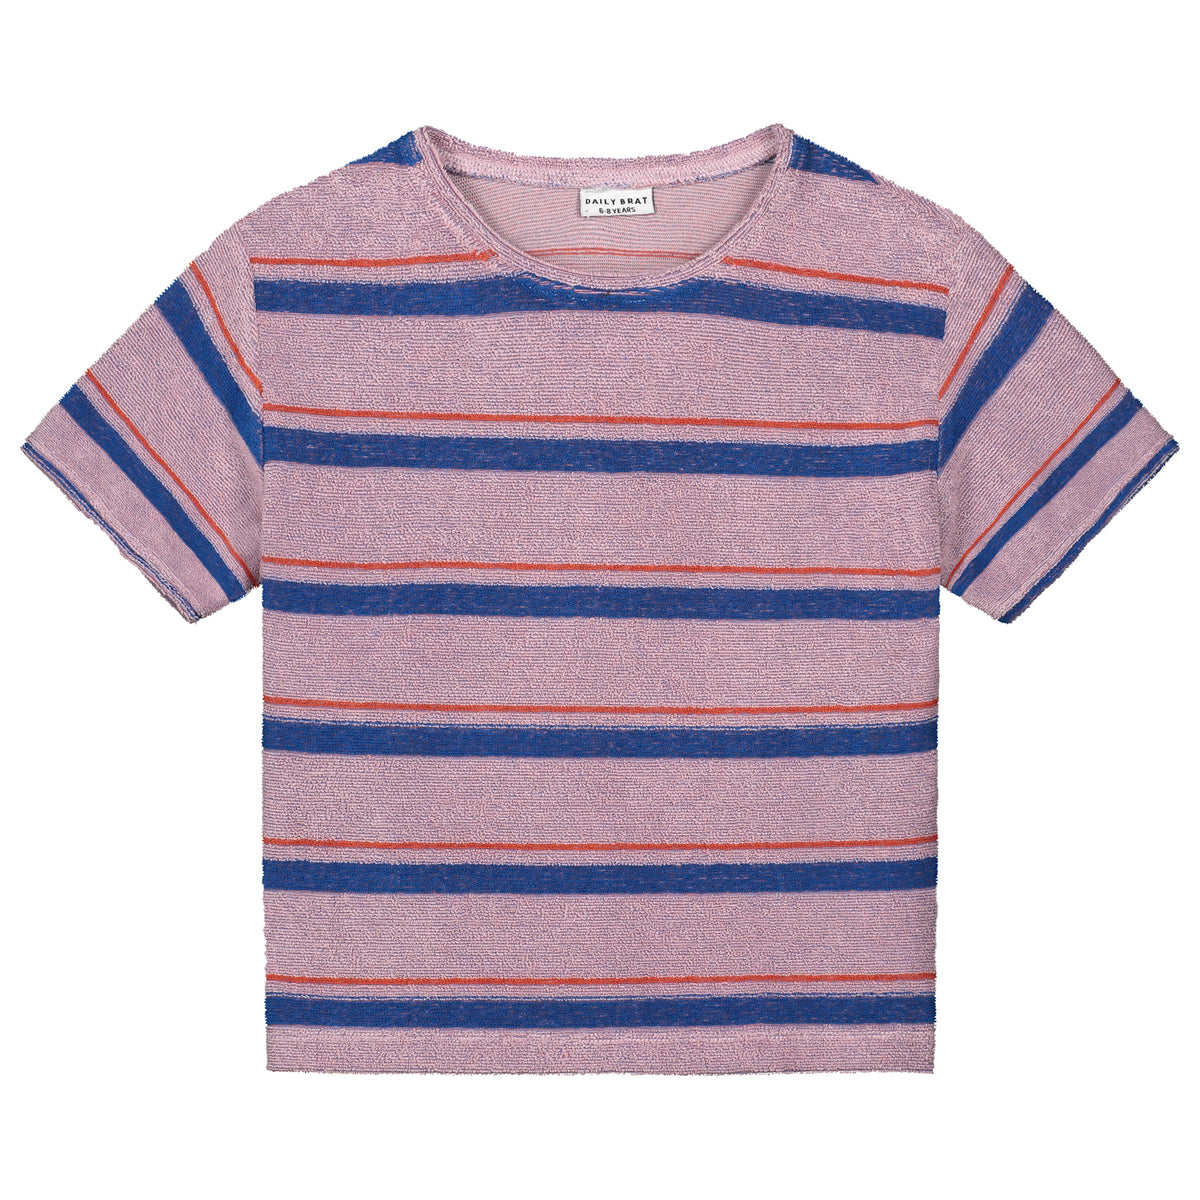 striped towel T-shirt breezy lilac, Daily Brat